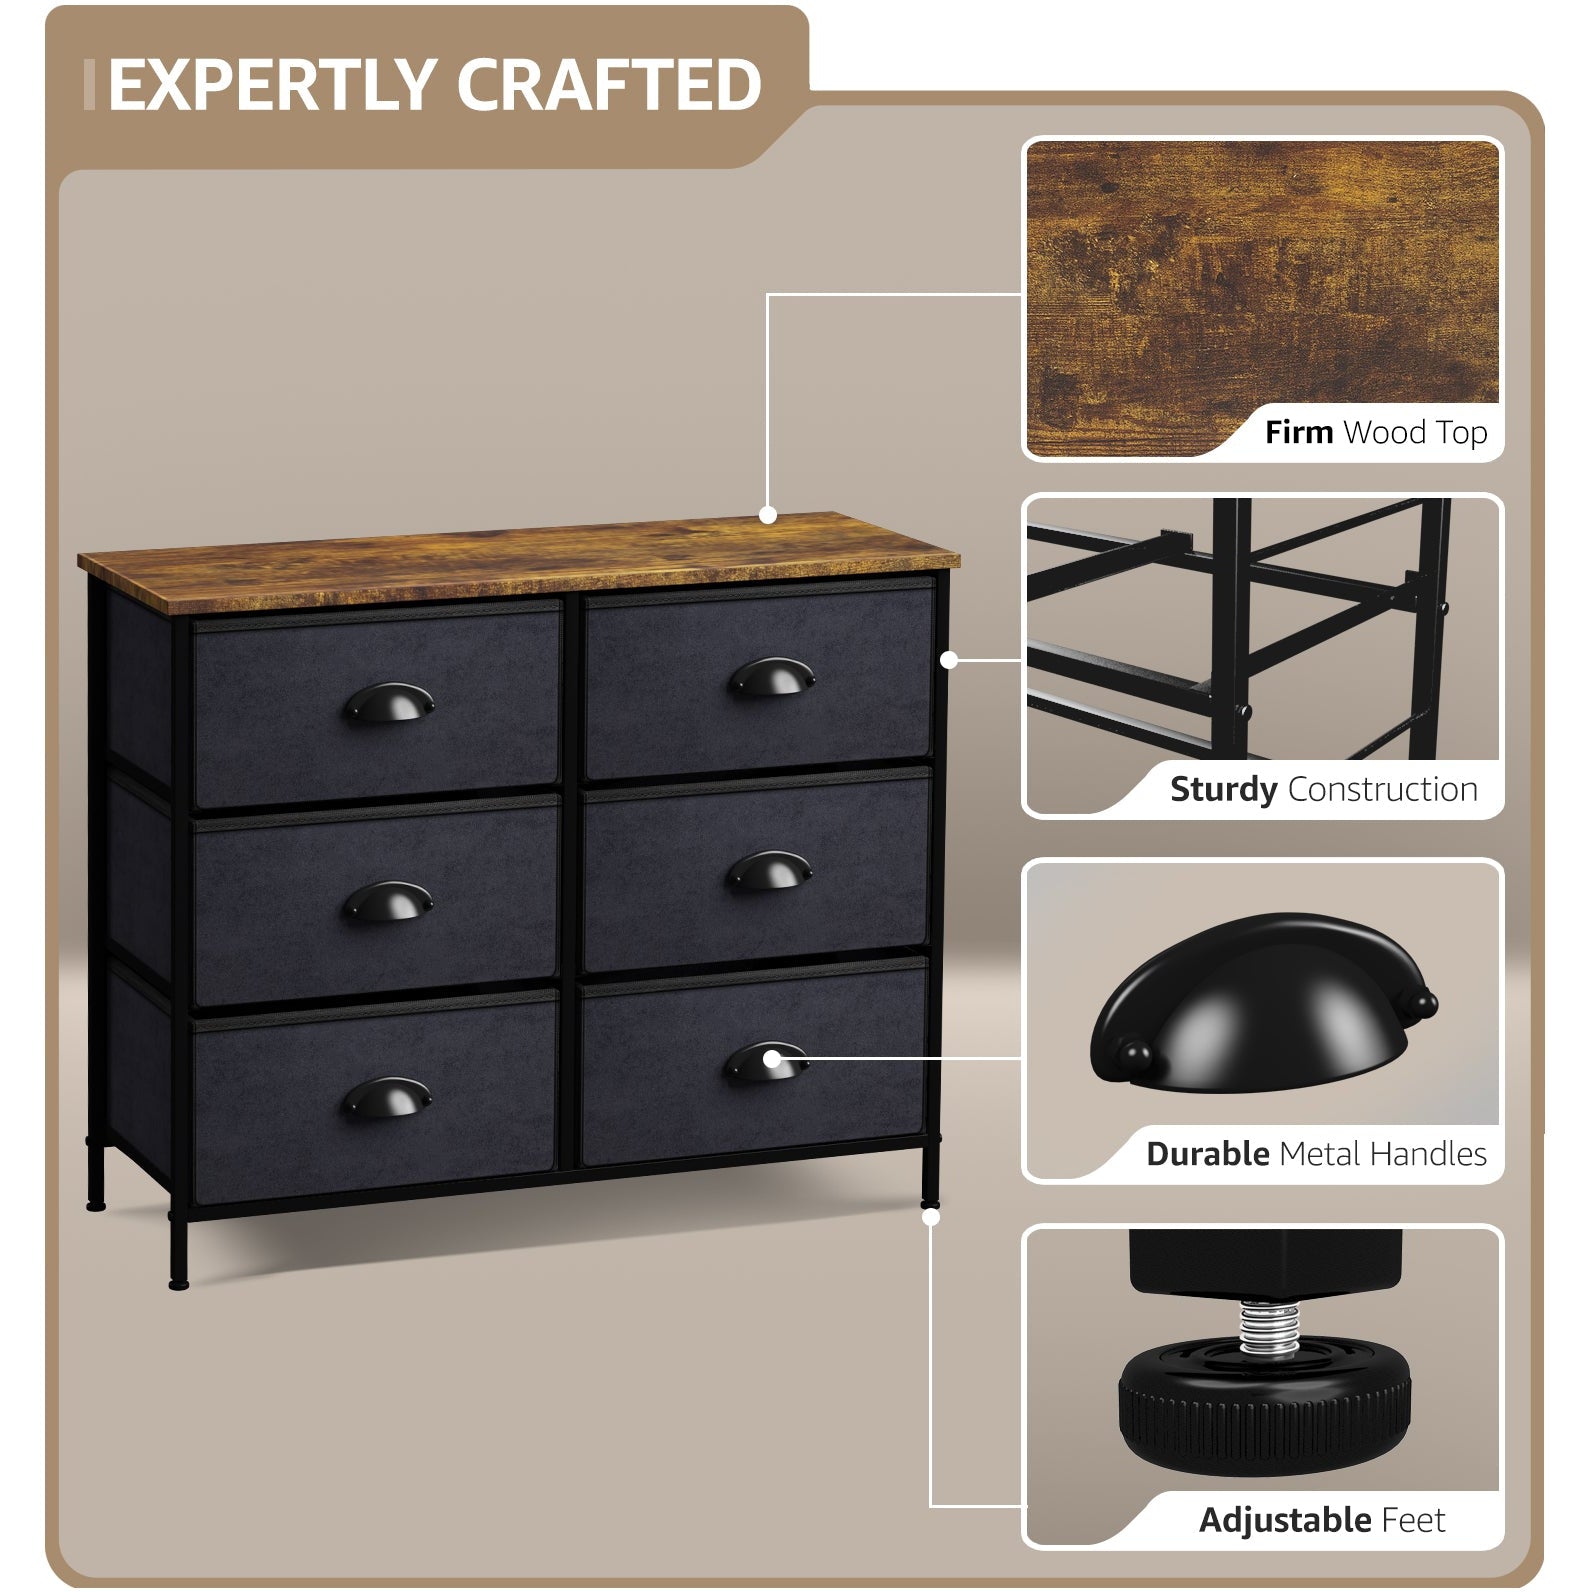 6-Drawer Rustic Wood Dresser